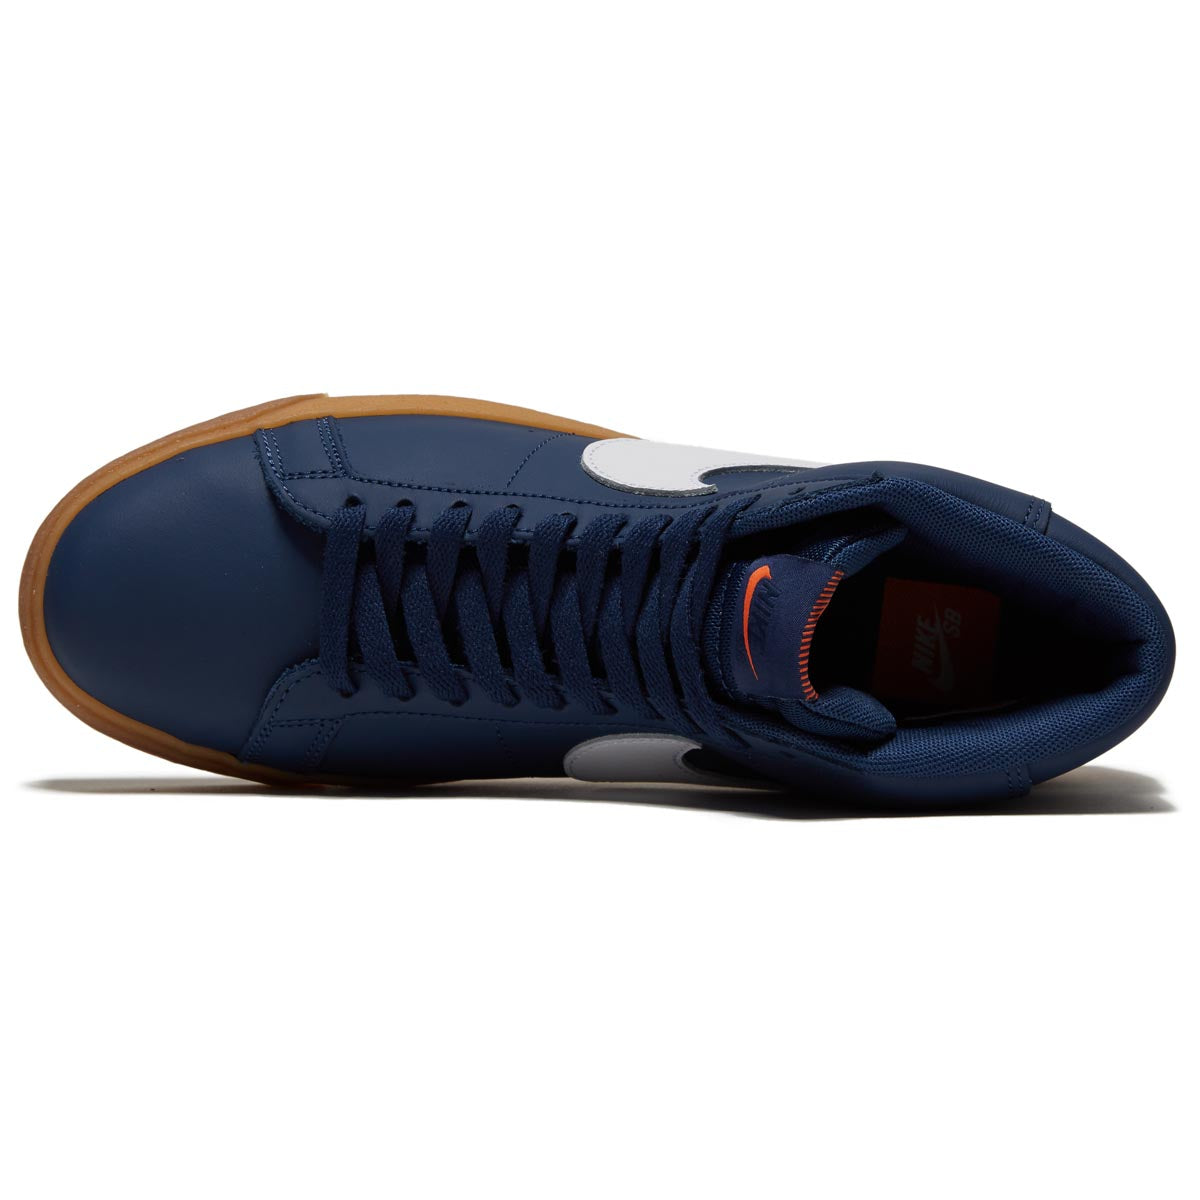 Nike SB Zoom Blazer Mid Shoes - Navy/White/Navy/Gum Light Brown image 3